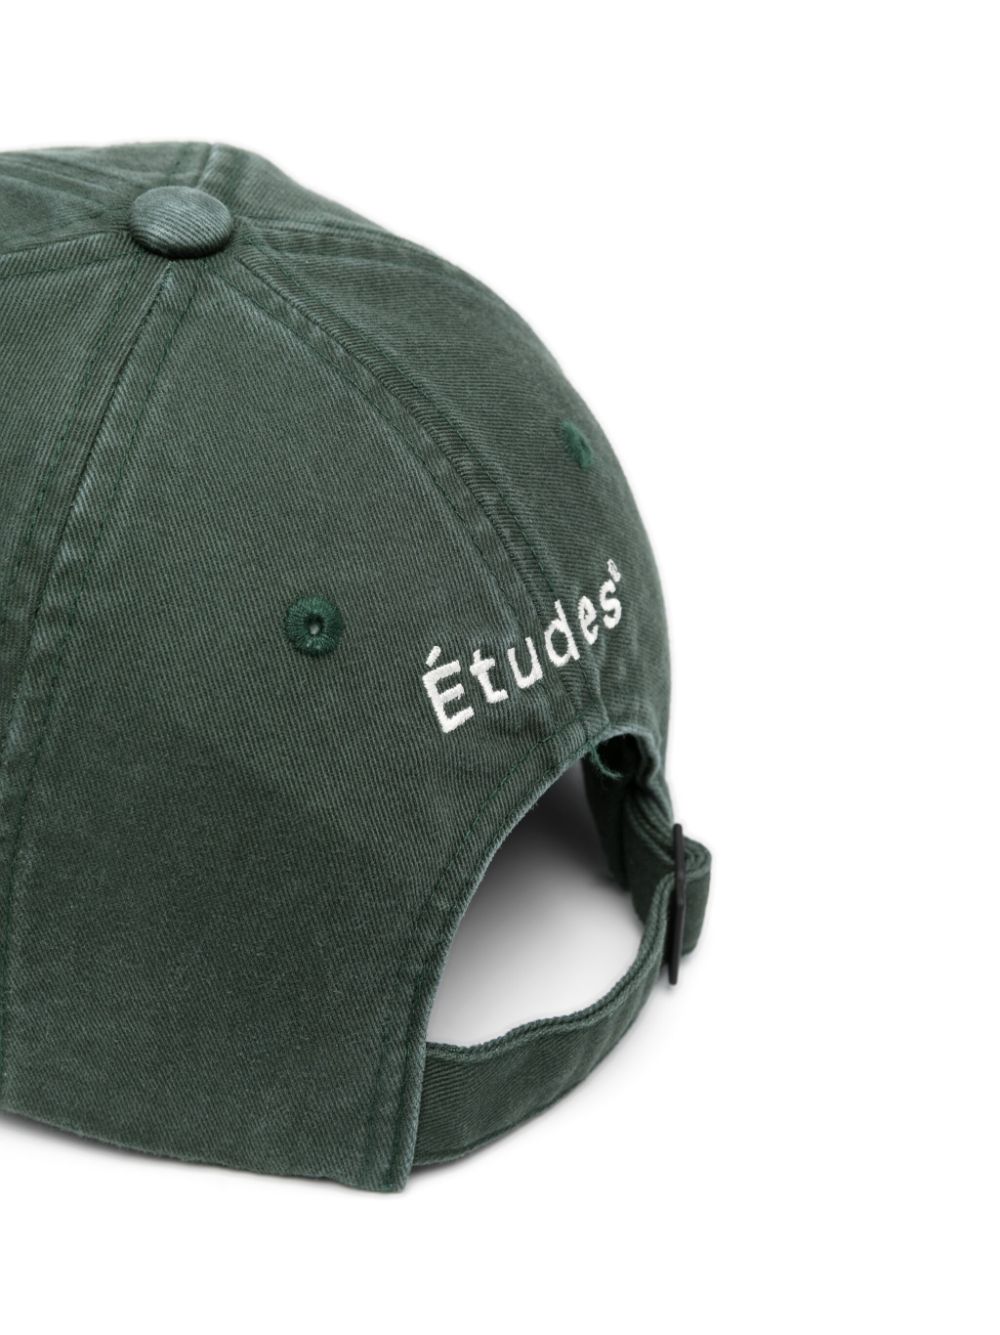 Etudes Booster cotton baseball cap - Groen